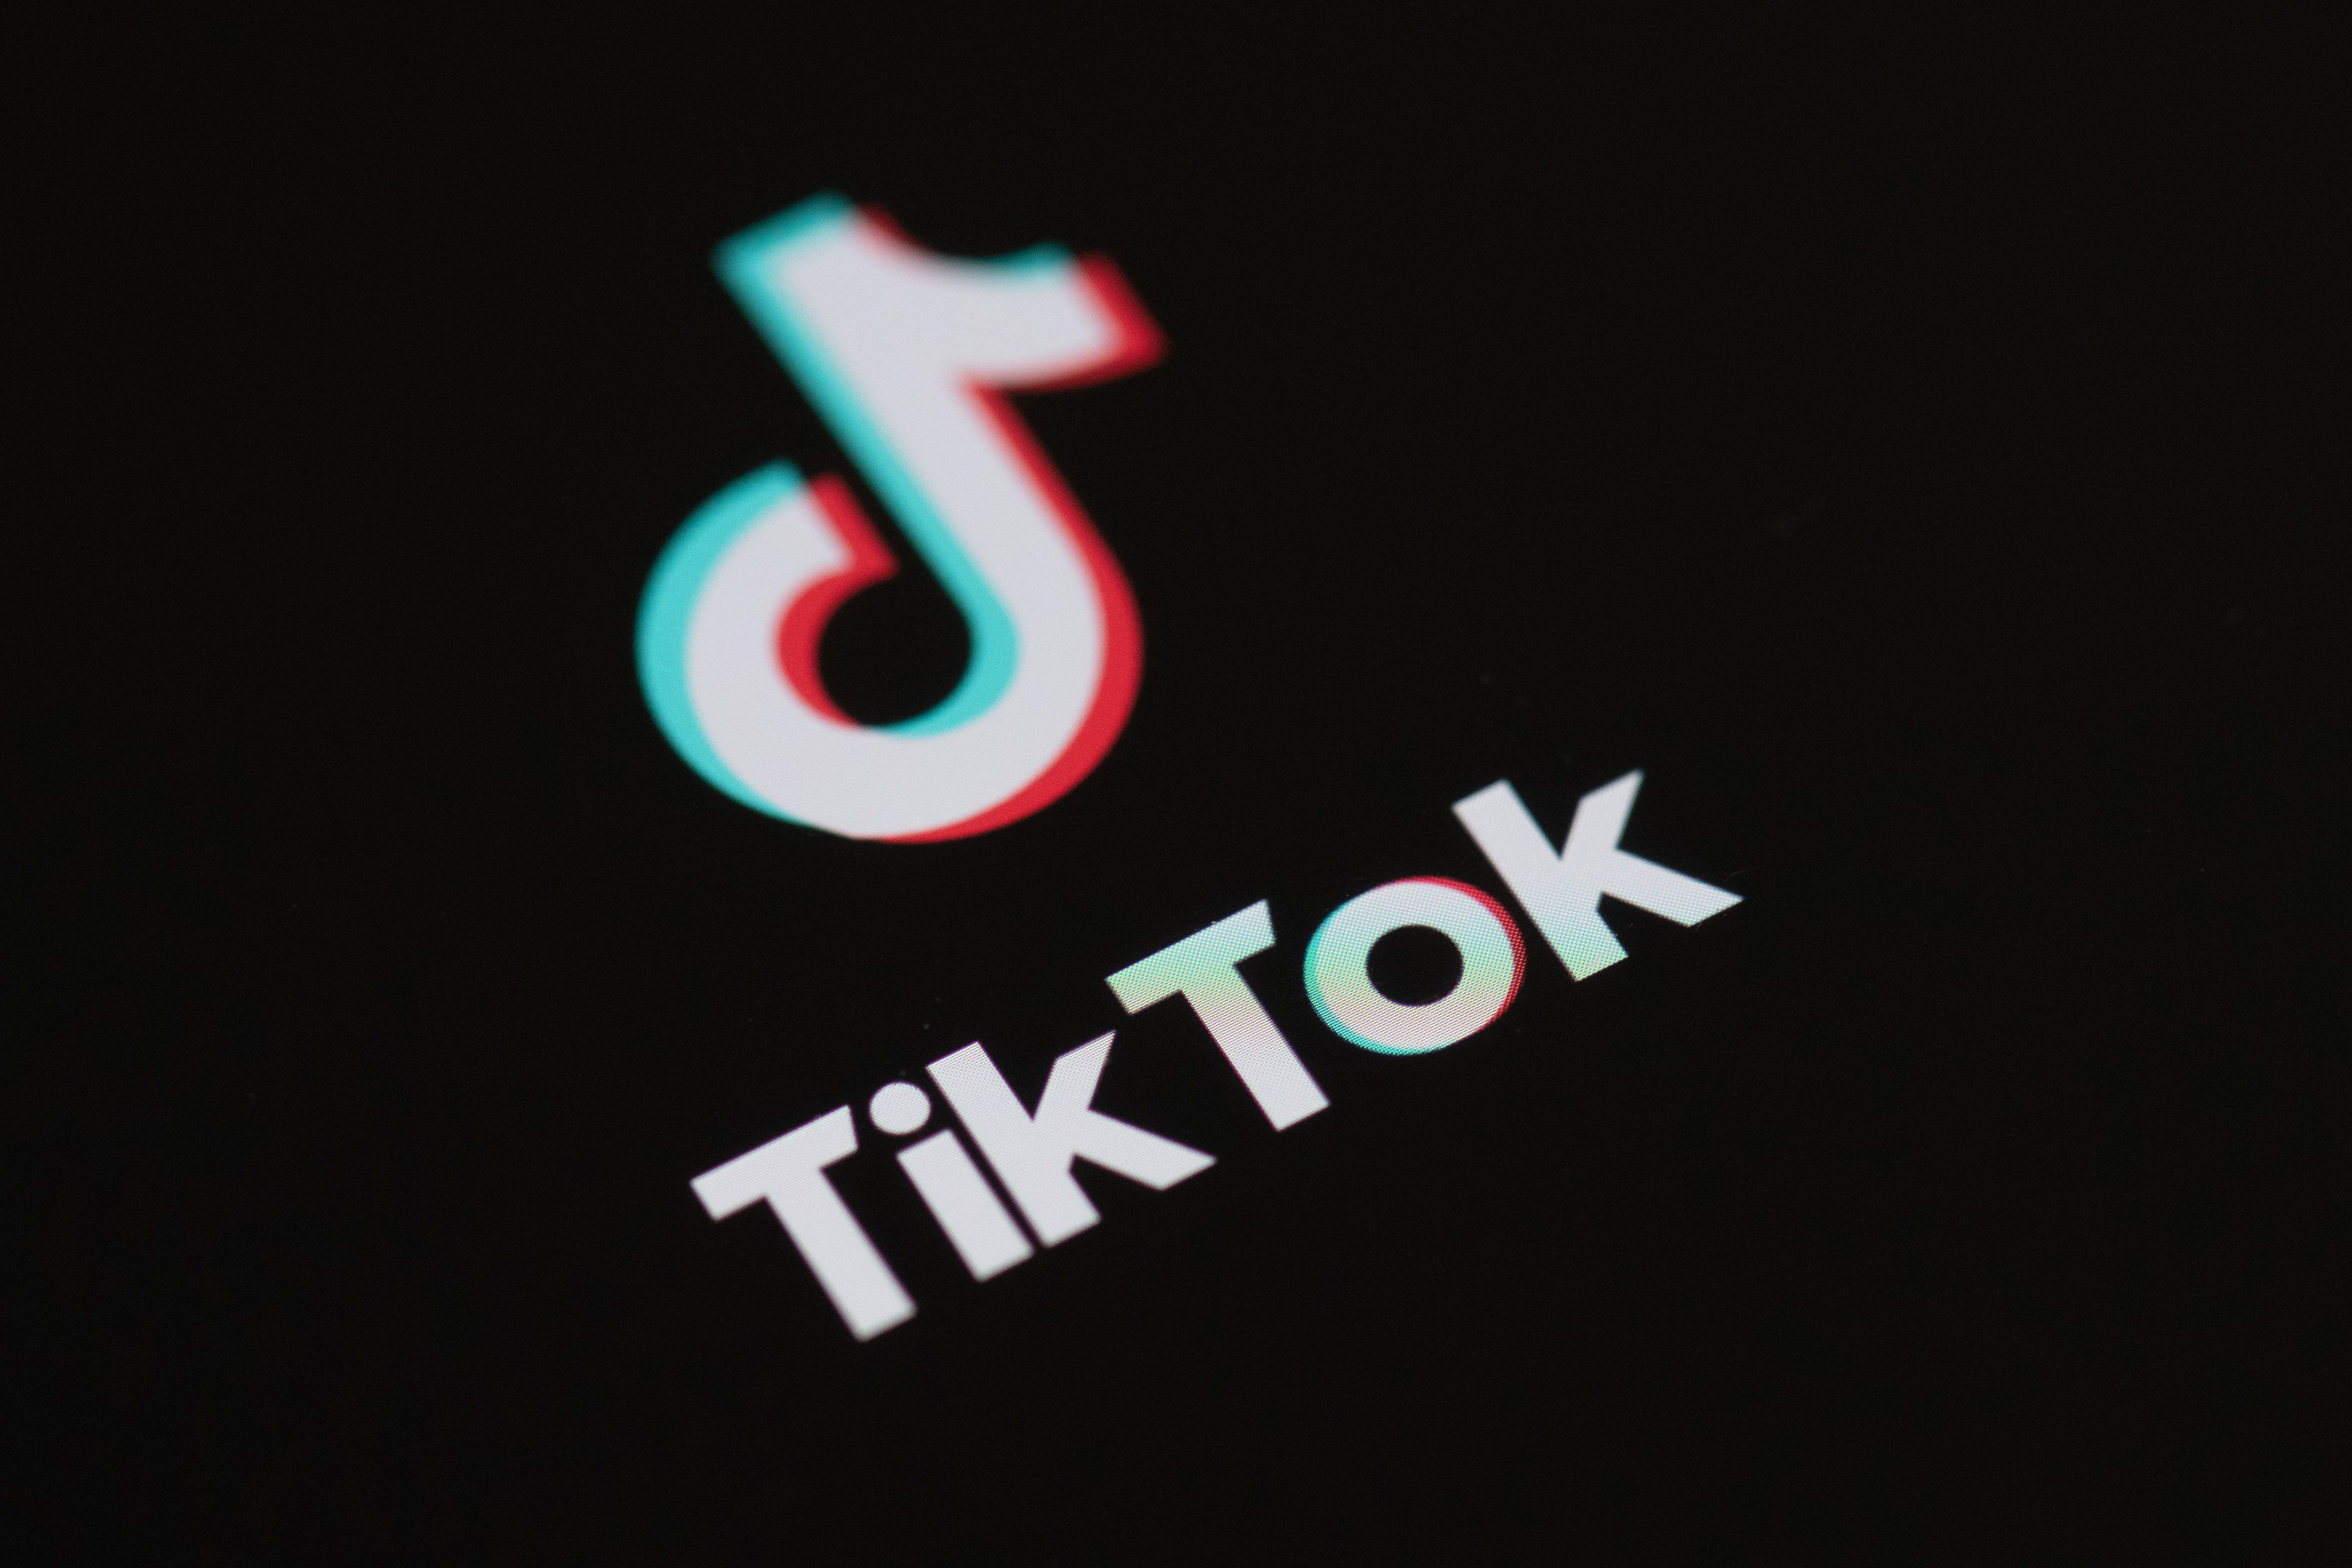 TikTokが親会社からの分離検討、米当局と合意に至らない場合－関係者